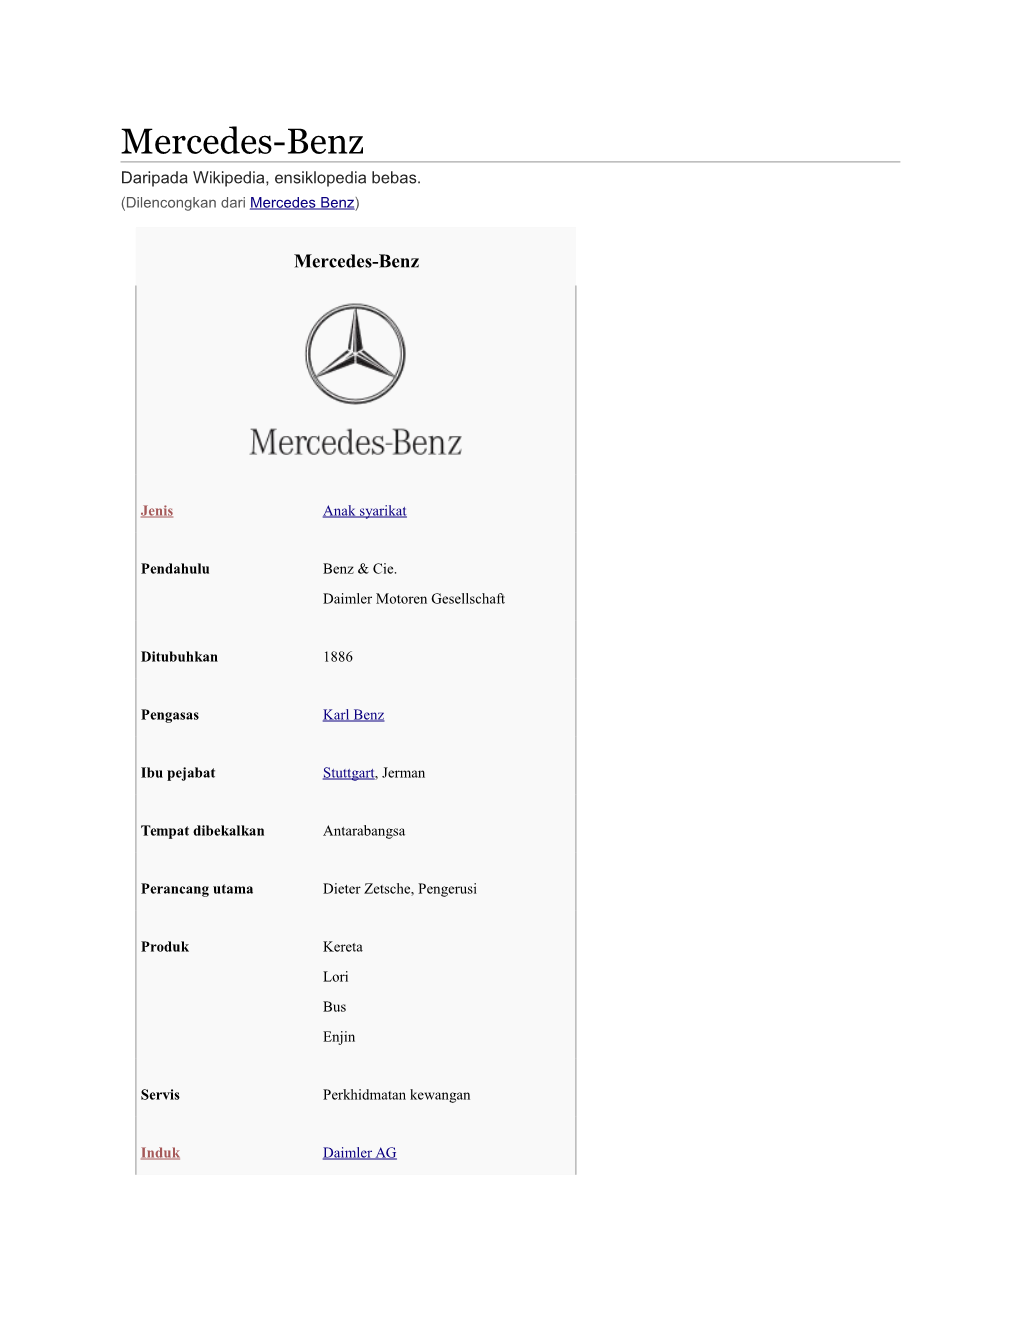 Mercedes-Benz Daripada Wikipedia, Ensiklopedia Bebas